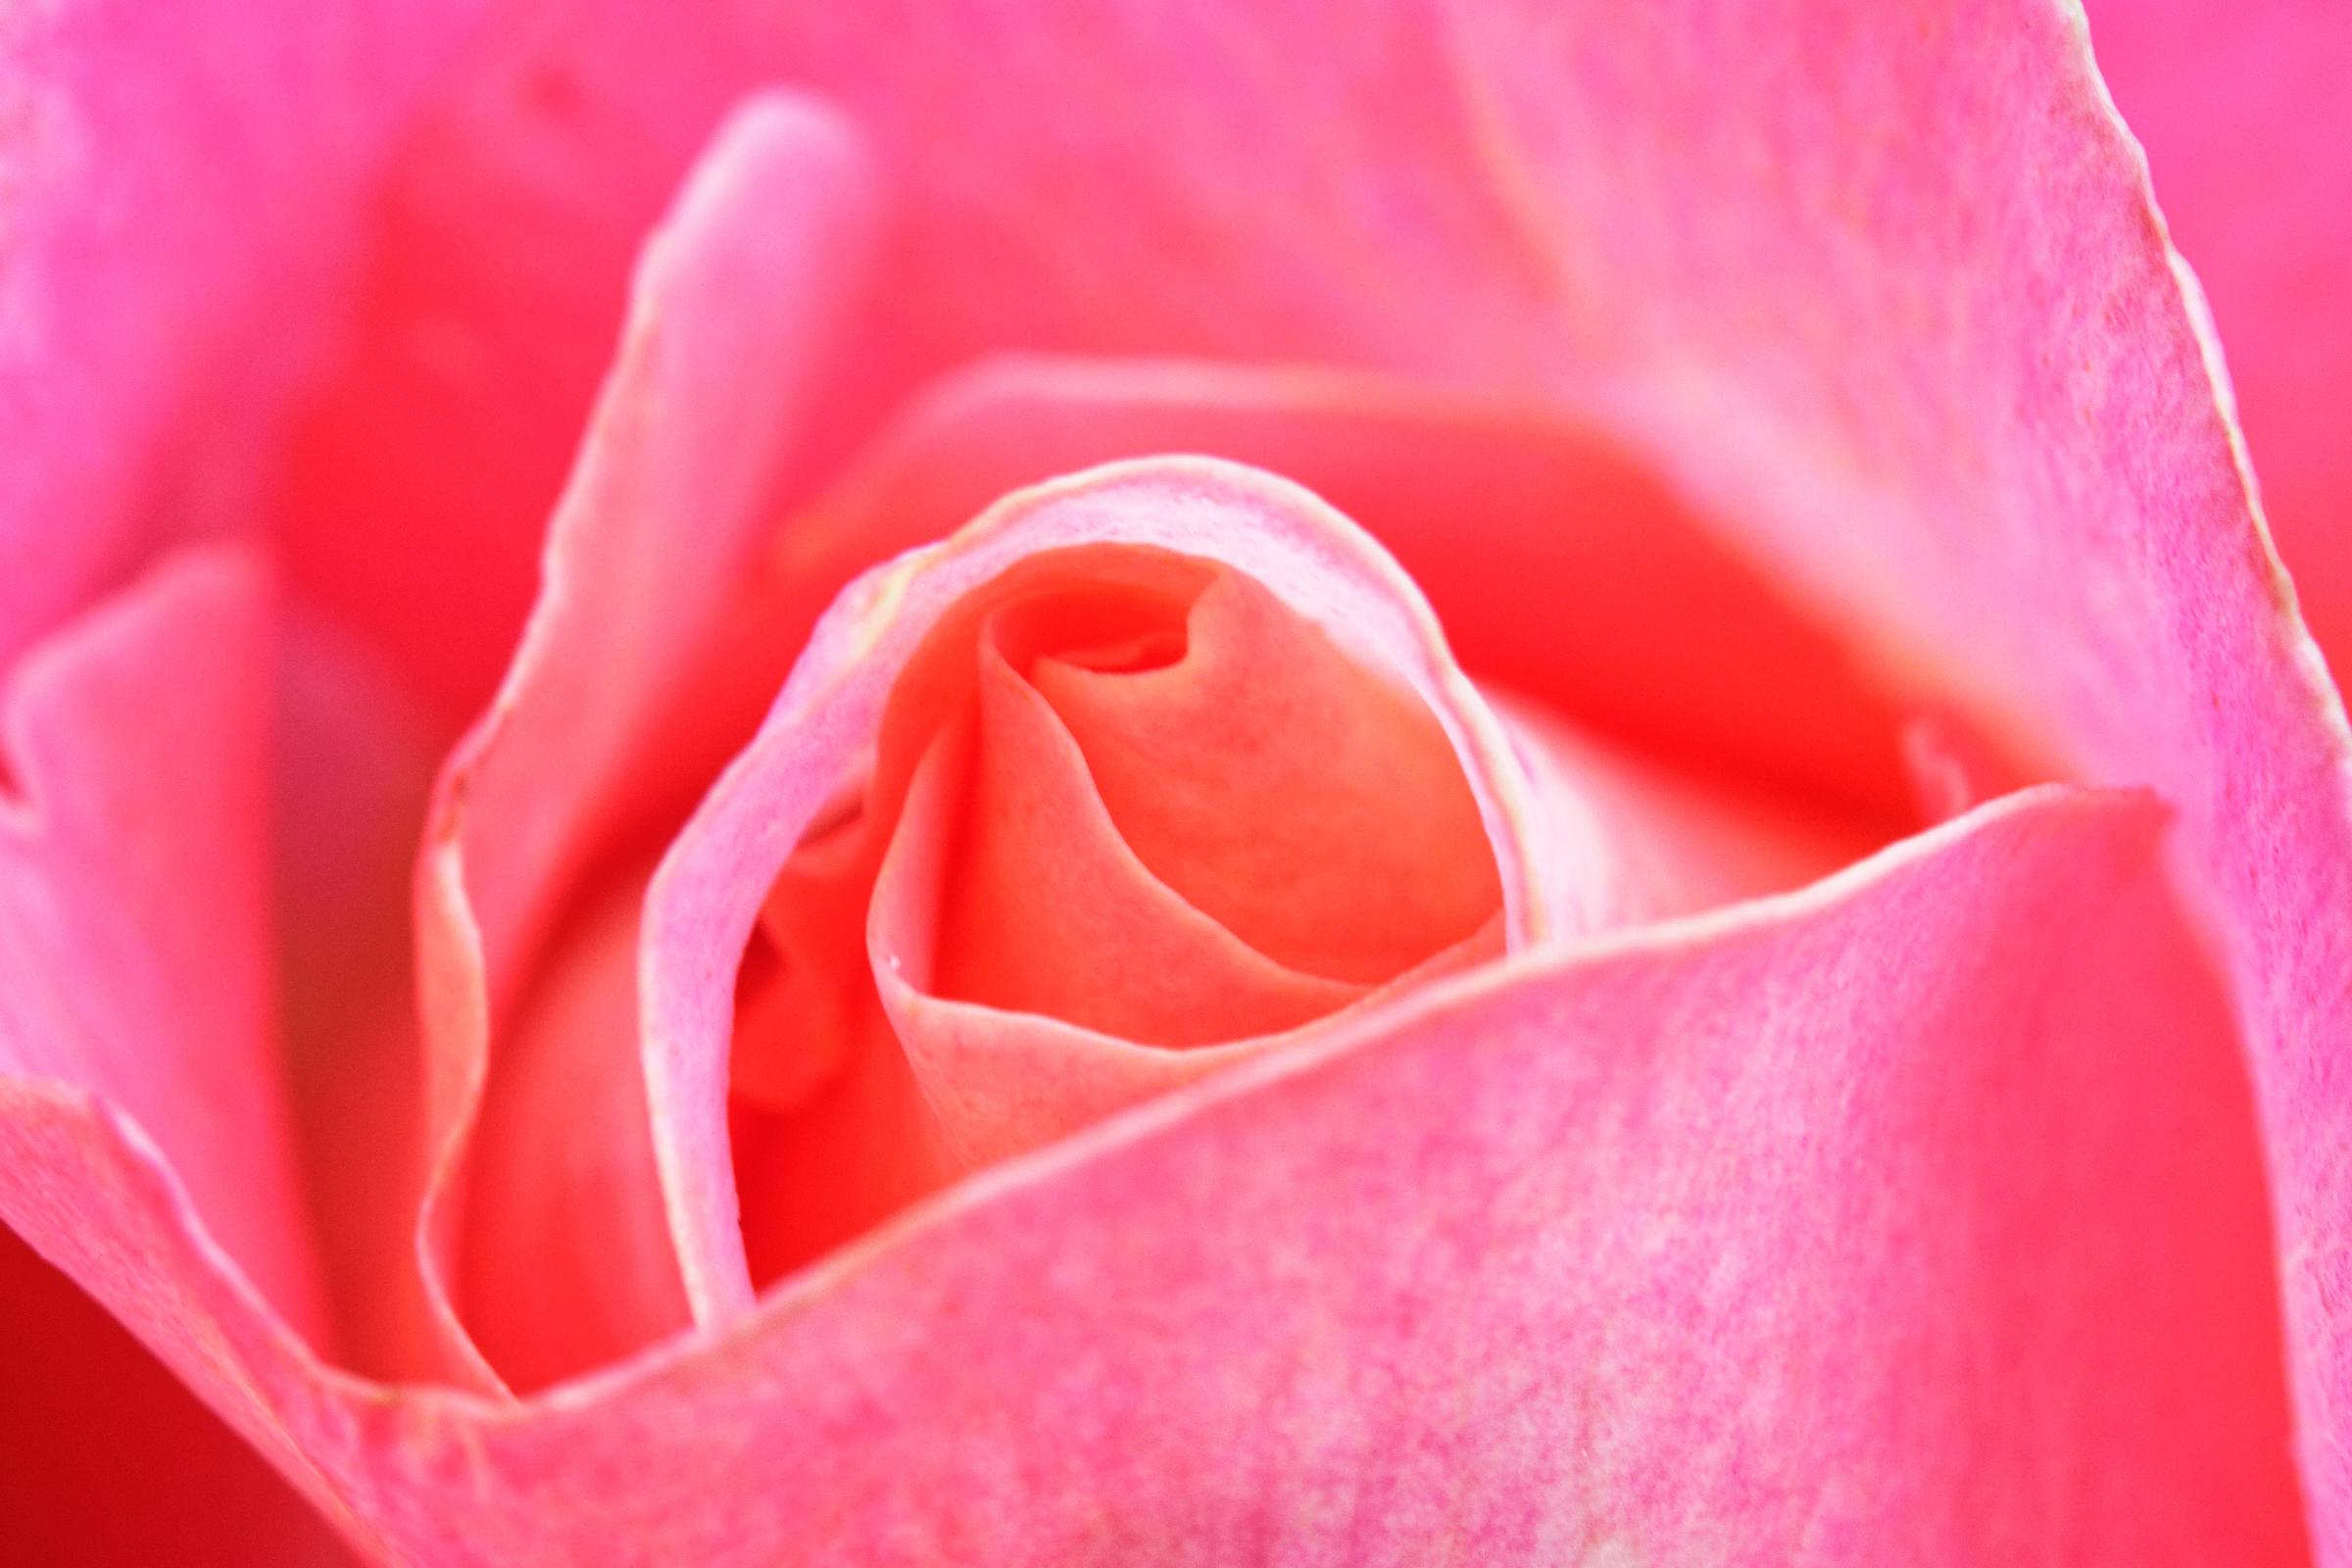 A pink rose from Janes Hartford garden